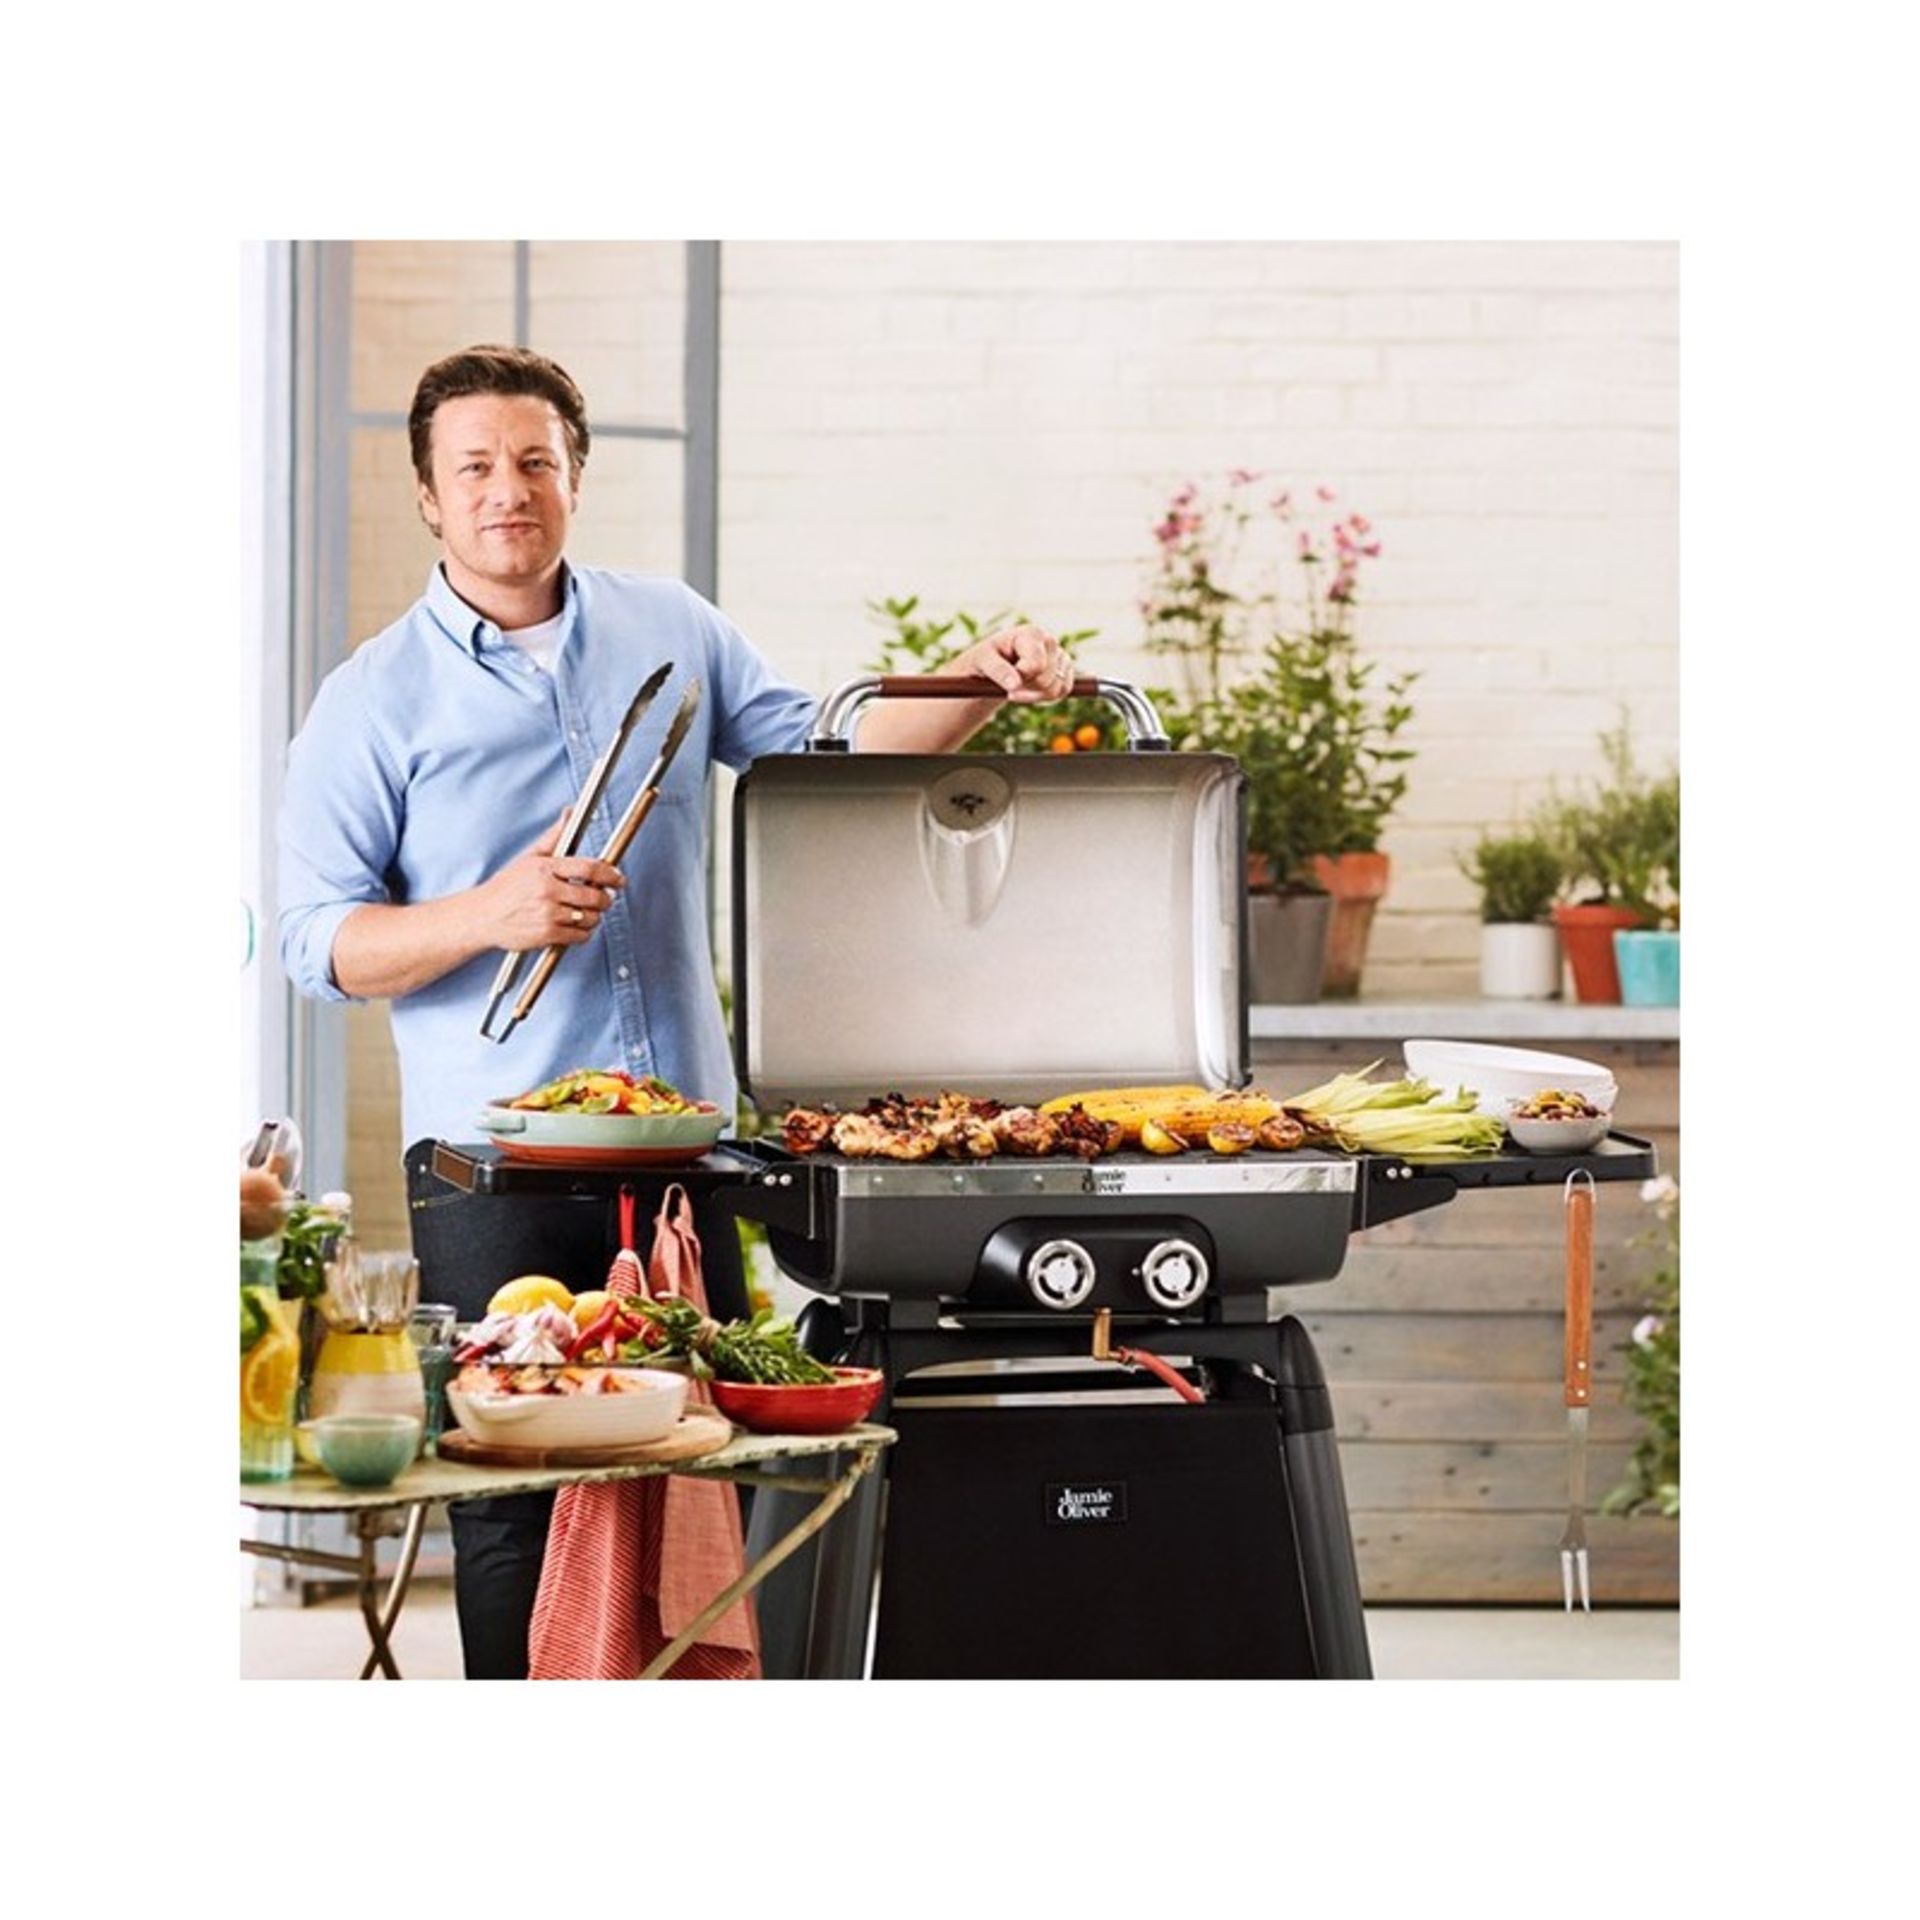 V Brand New Jamie Oliver Explorer 5500 BBQ - Grey - Online Price 399.00 Euros (JamieOliverBBQ.com) - Image 5 of 5